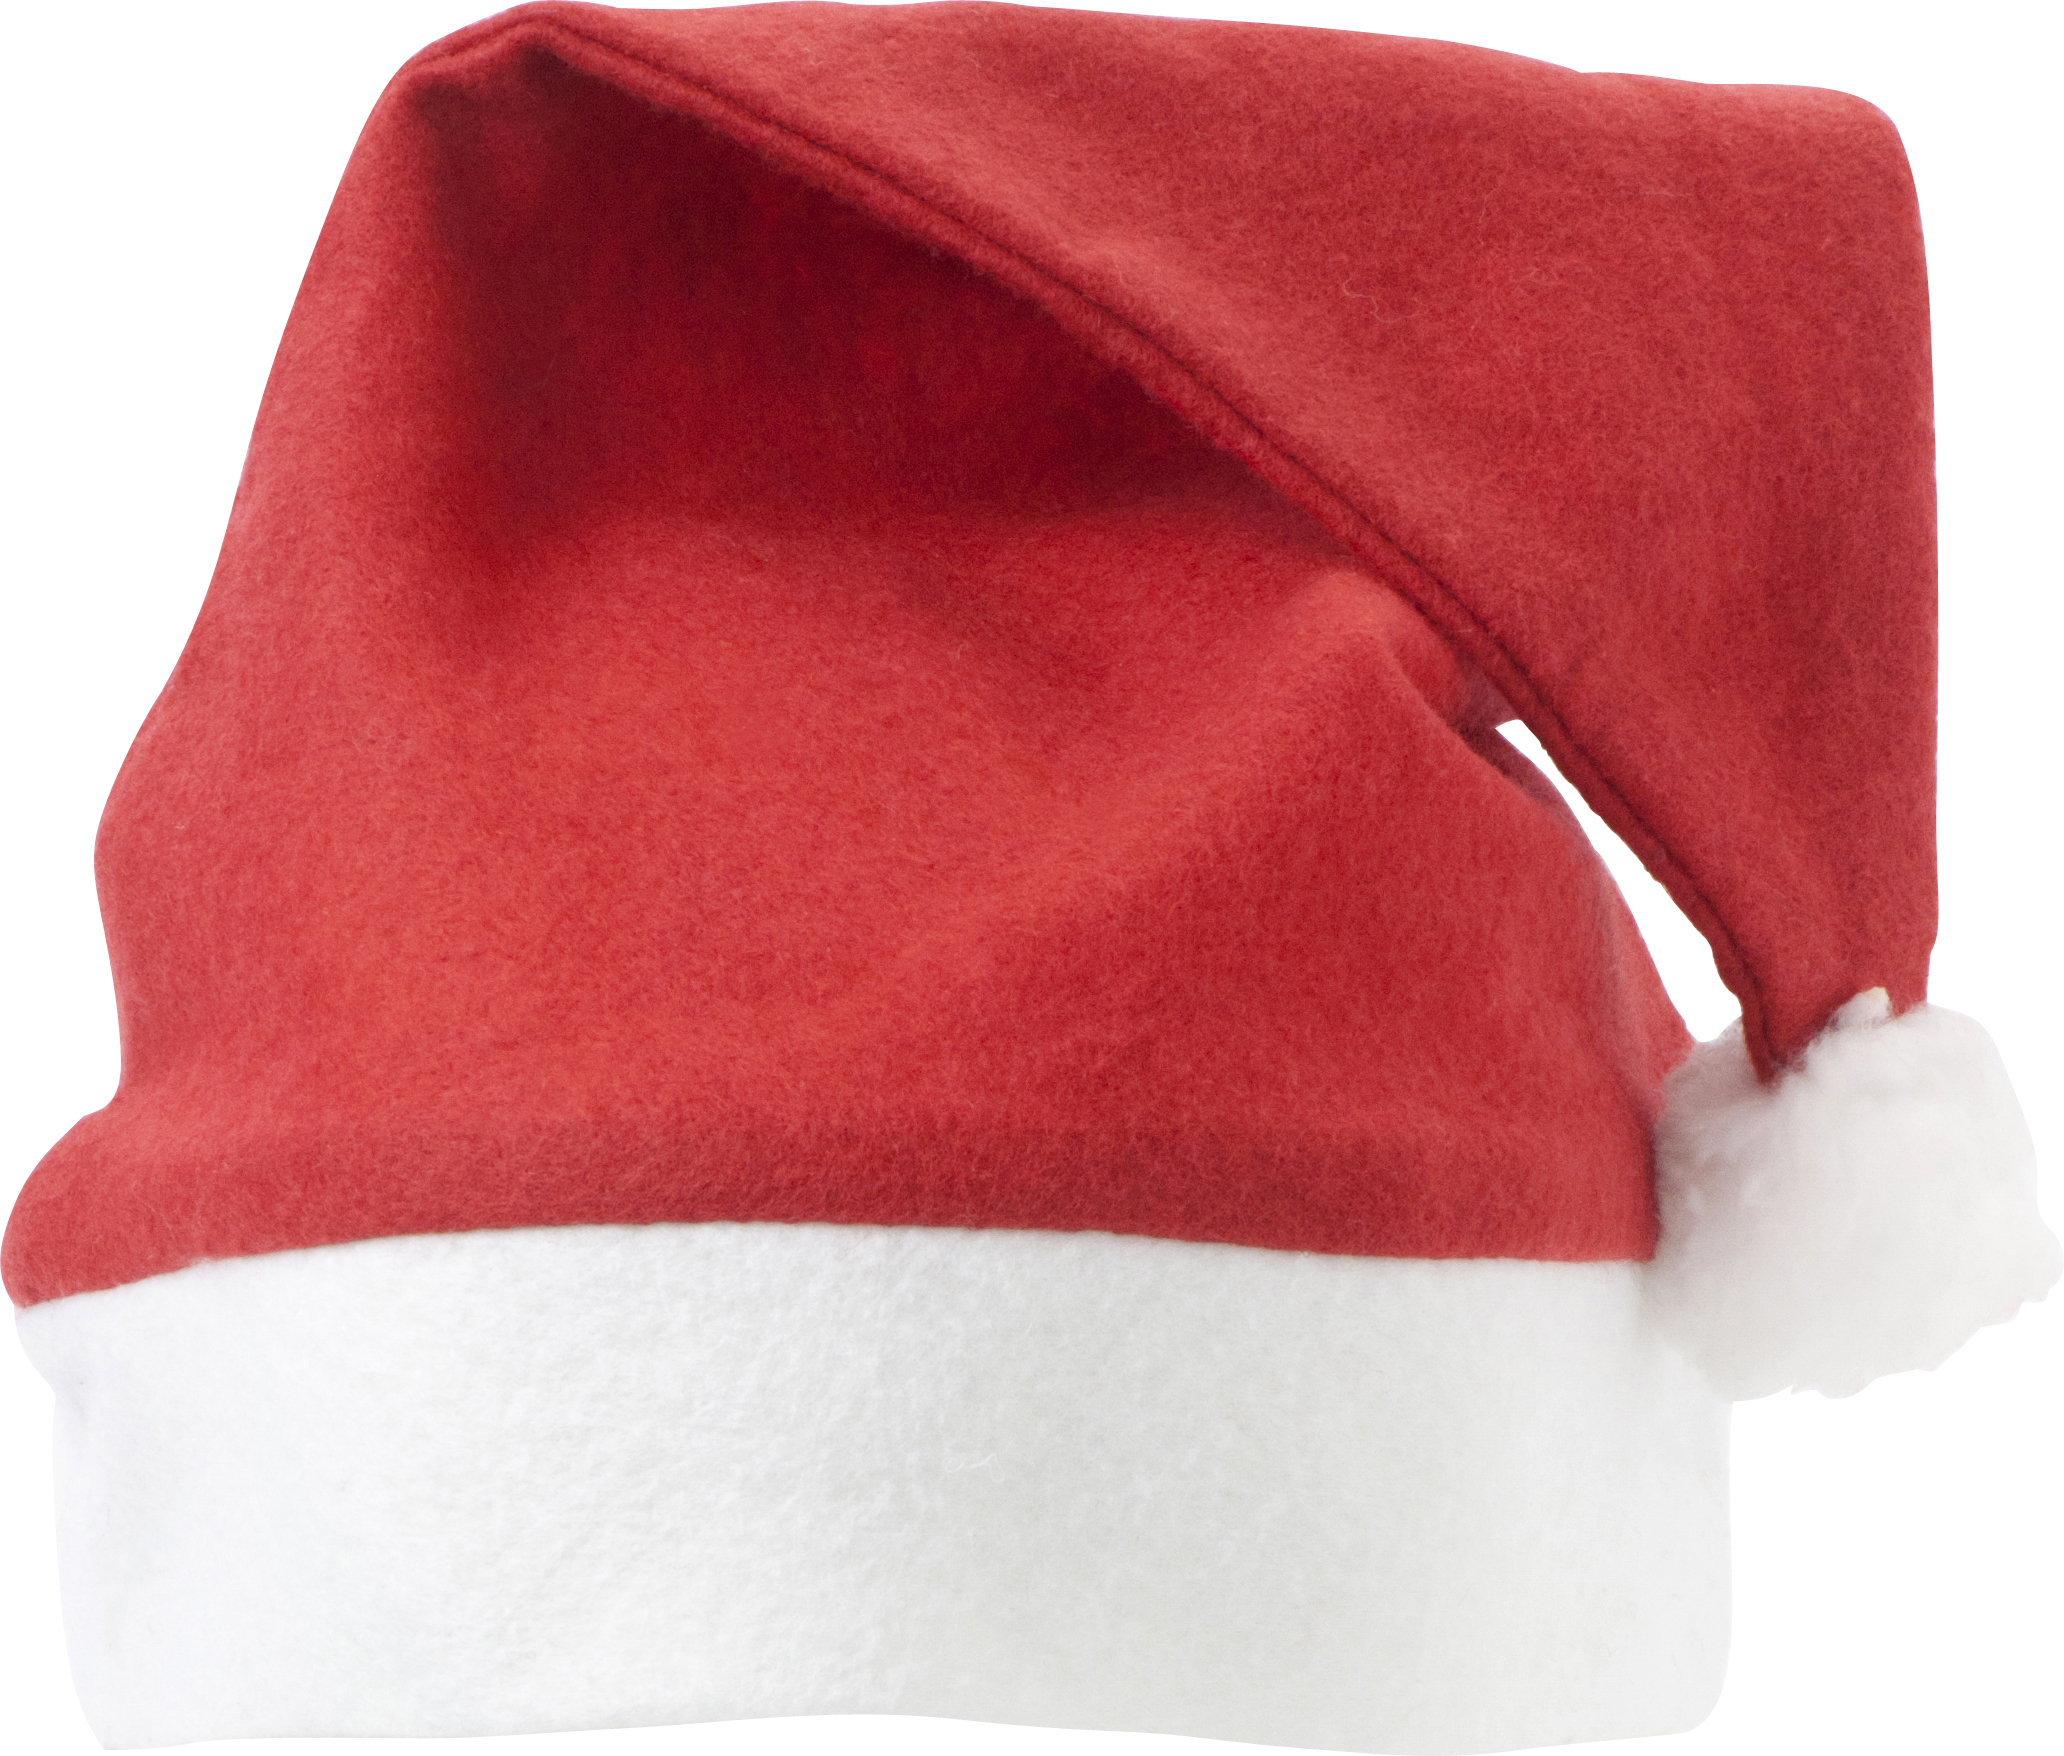 003120 008999999 2d090 frt pro02 fal - Felt Christmas hat